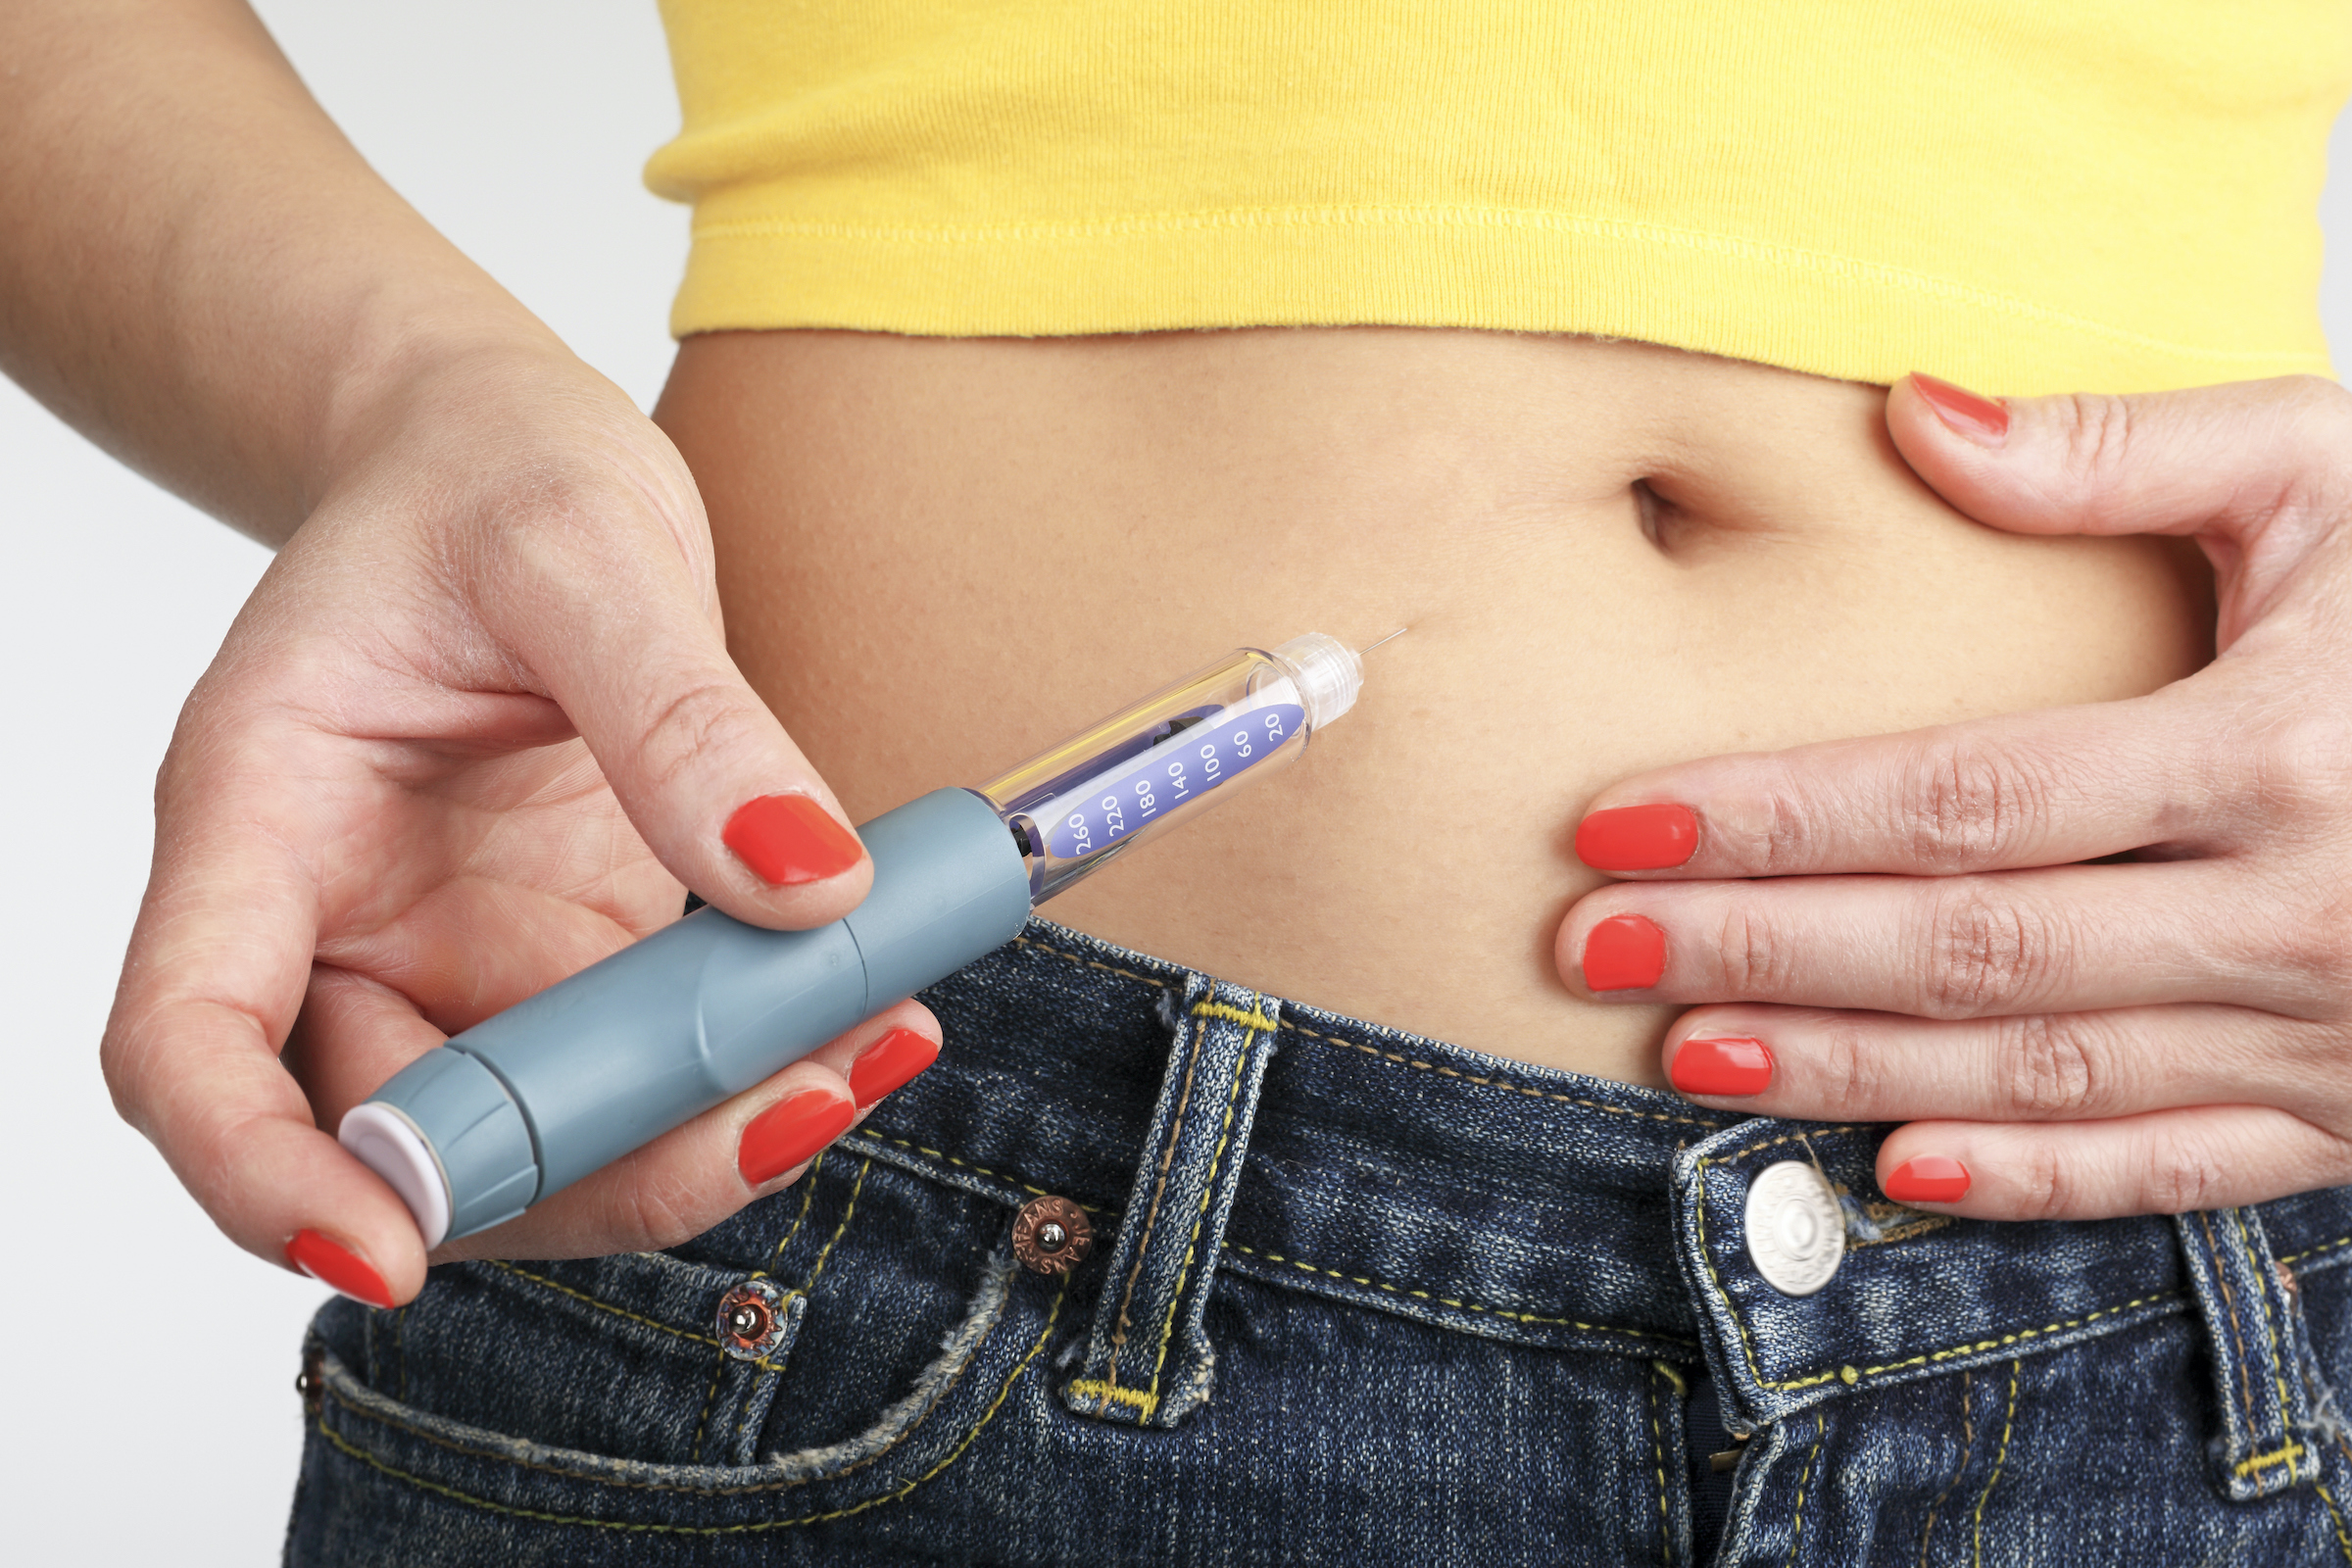 diabetes research high insulin affects